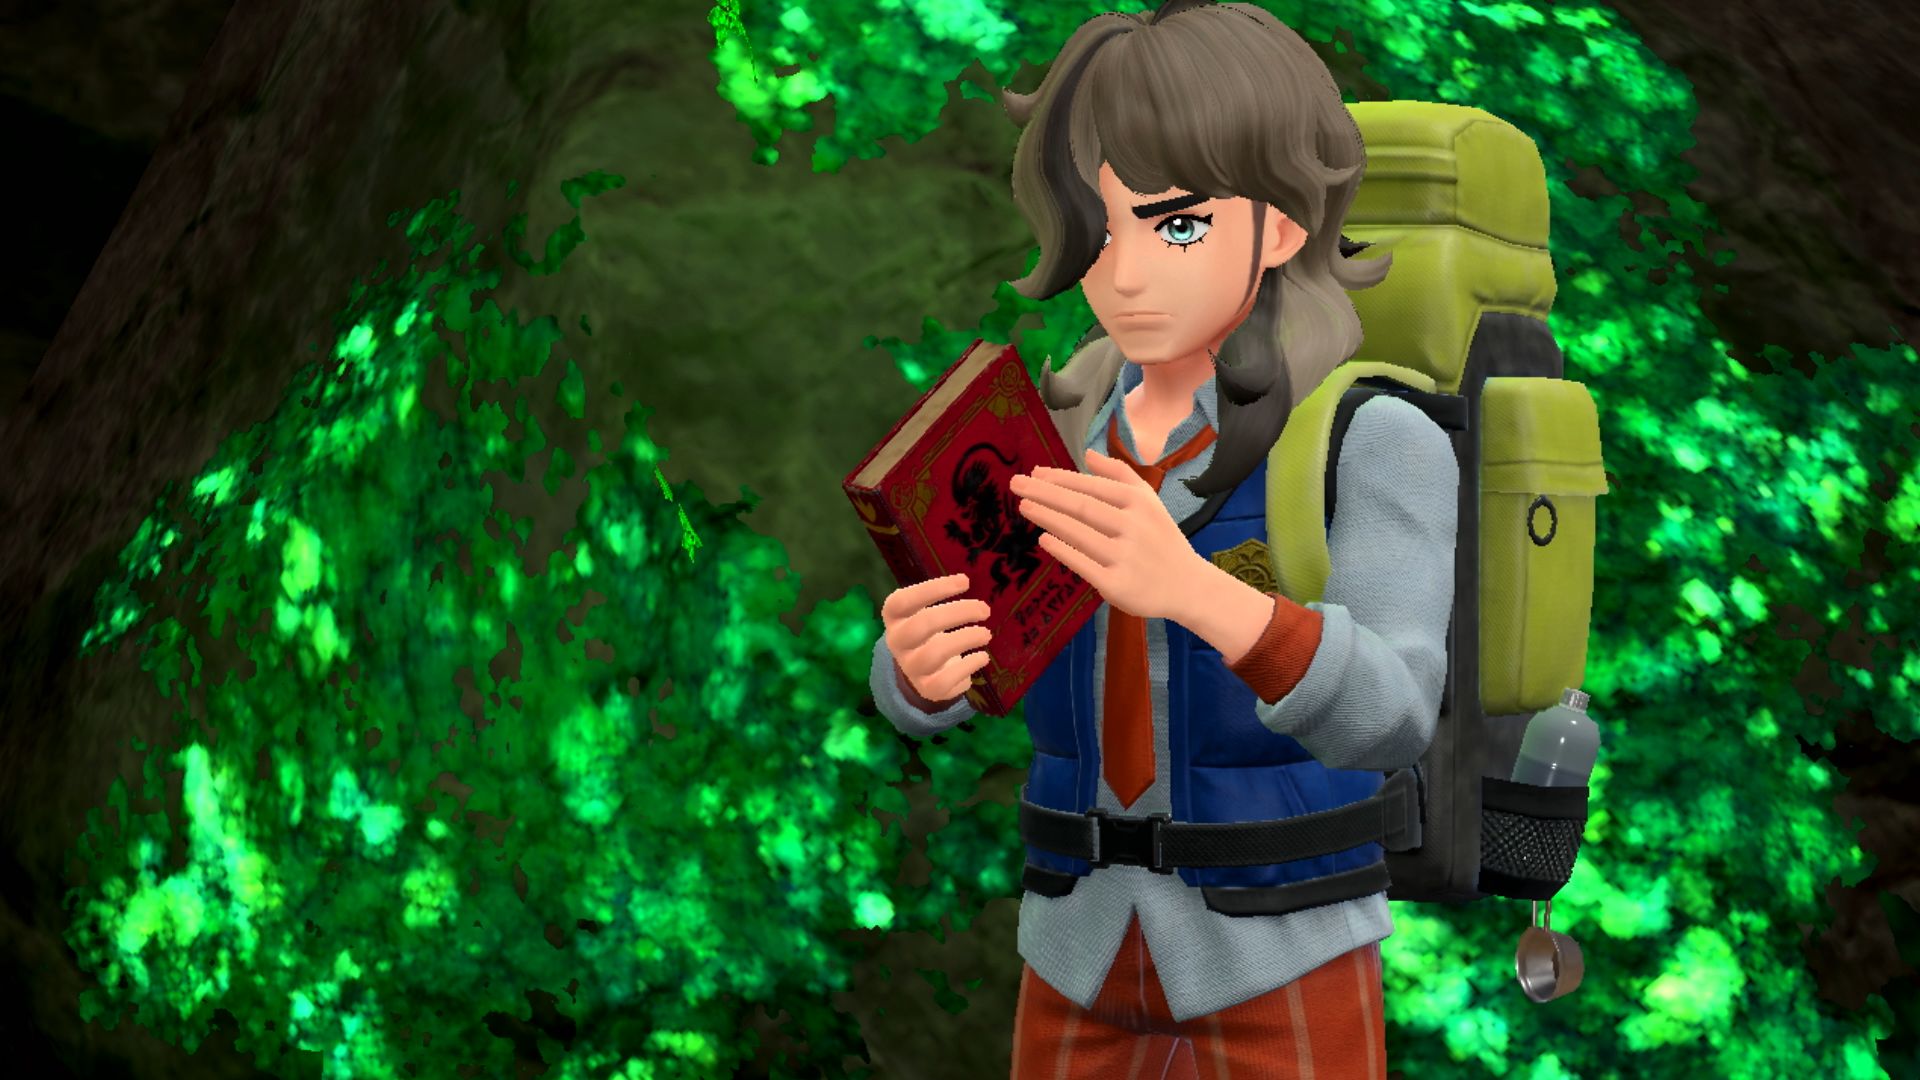 Pokémon Scarlet/Violet: Wild Tera Pokémon Guide - KeenGamer